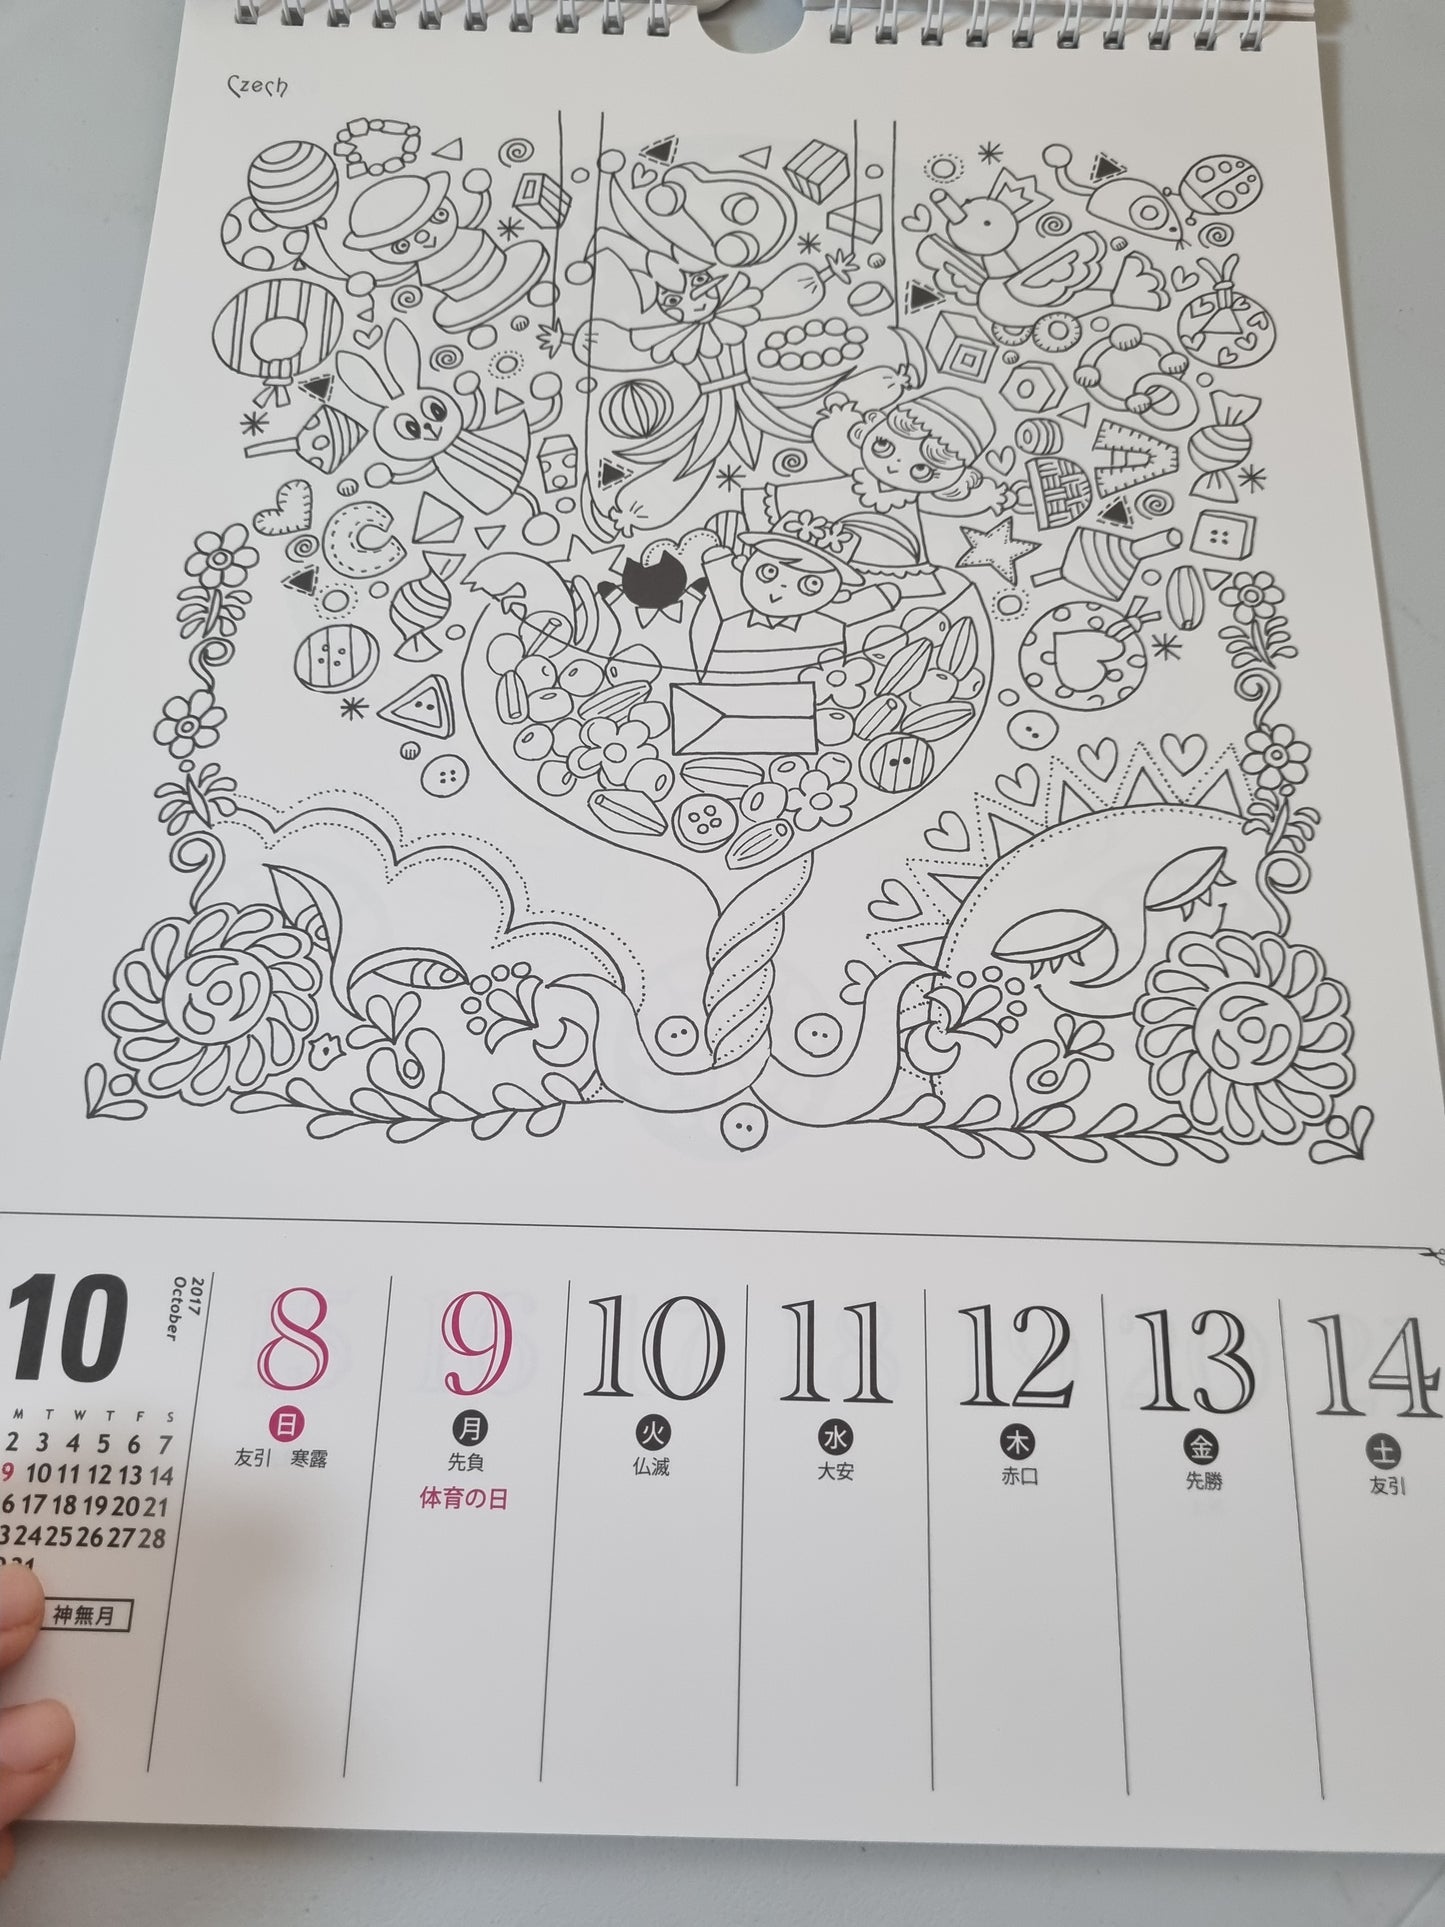 Around the world 2017 Coloring Calendar